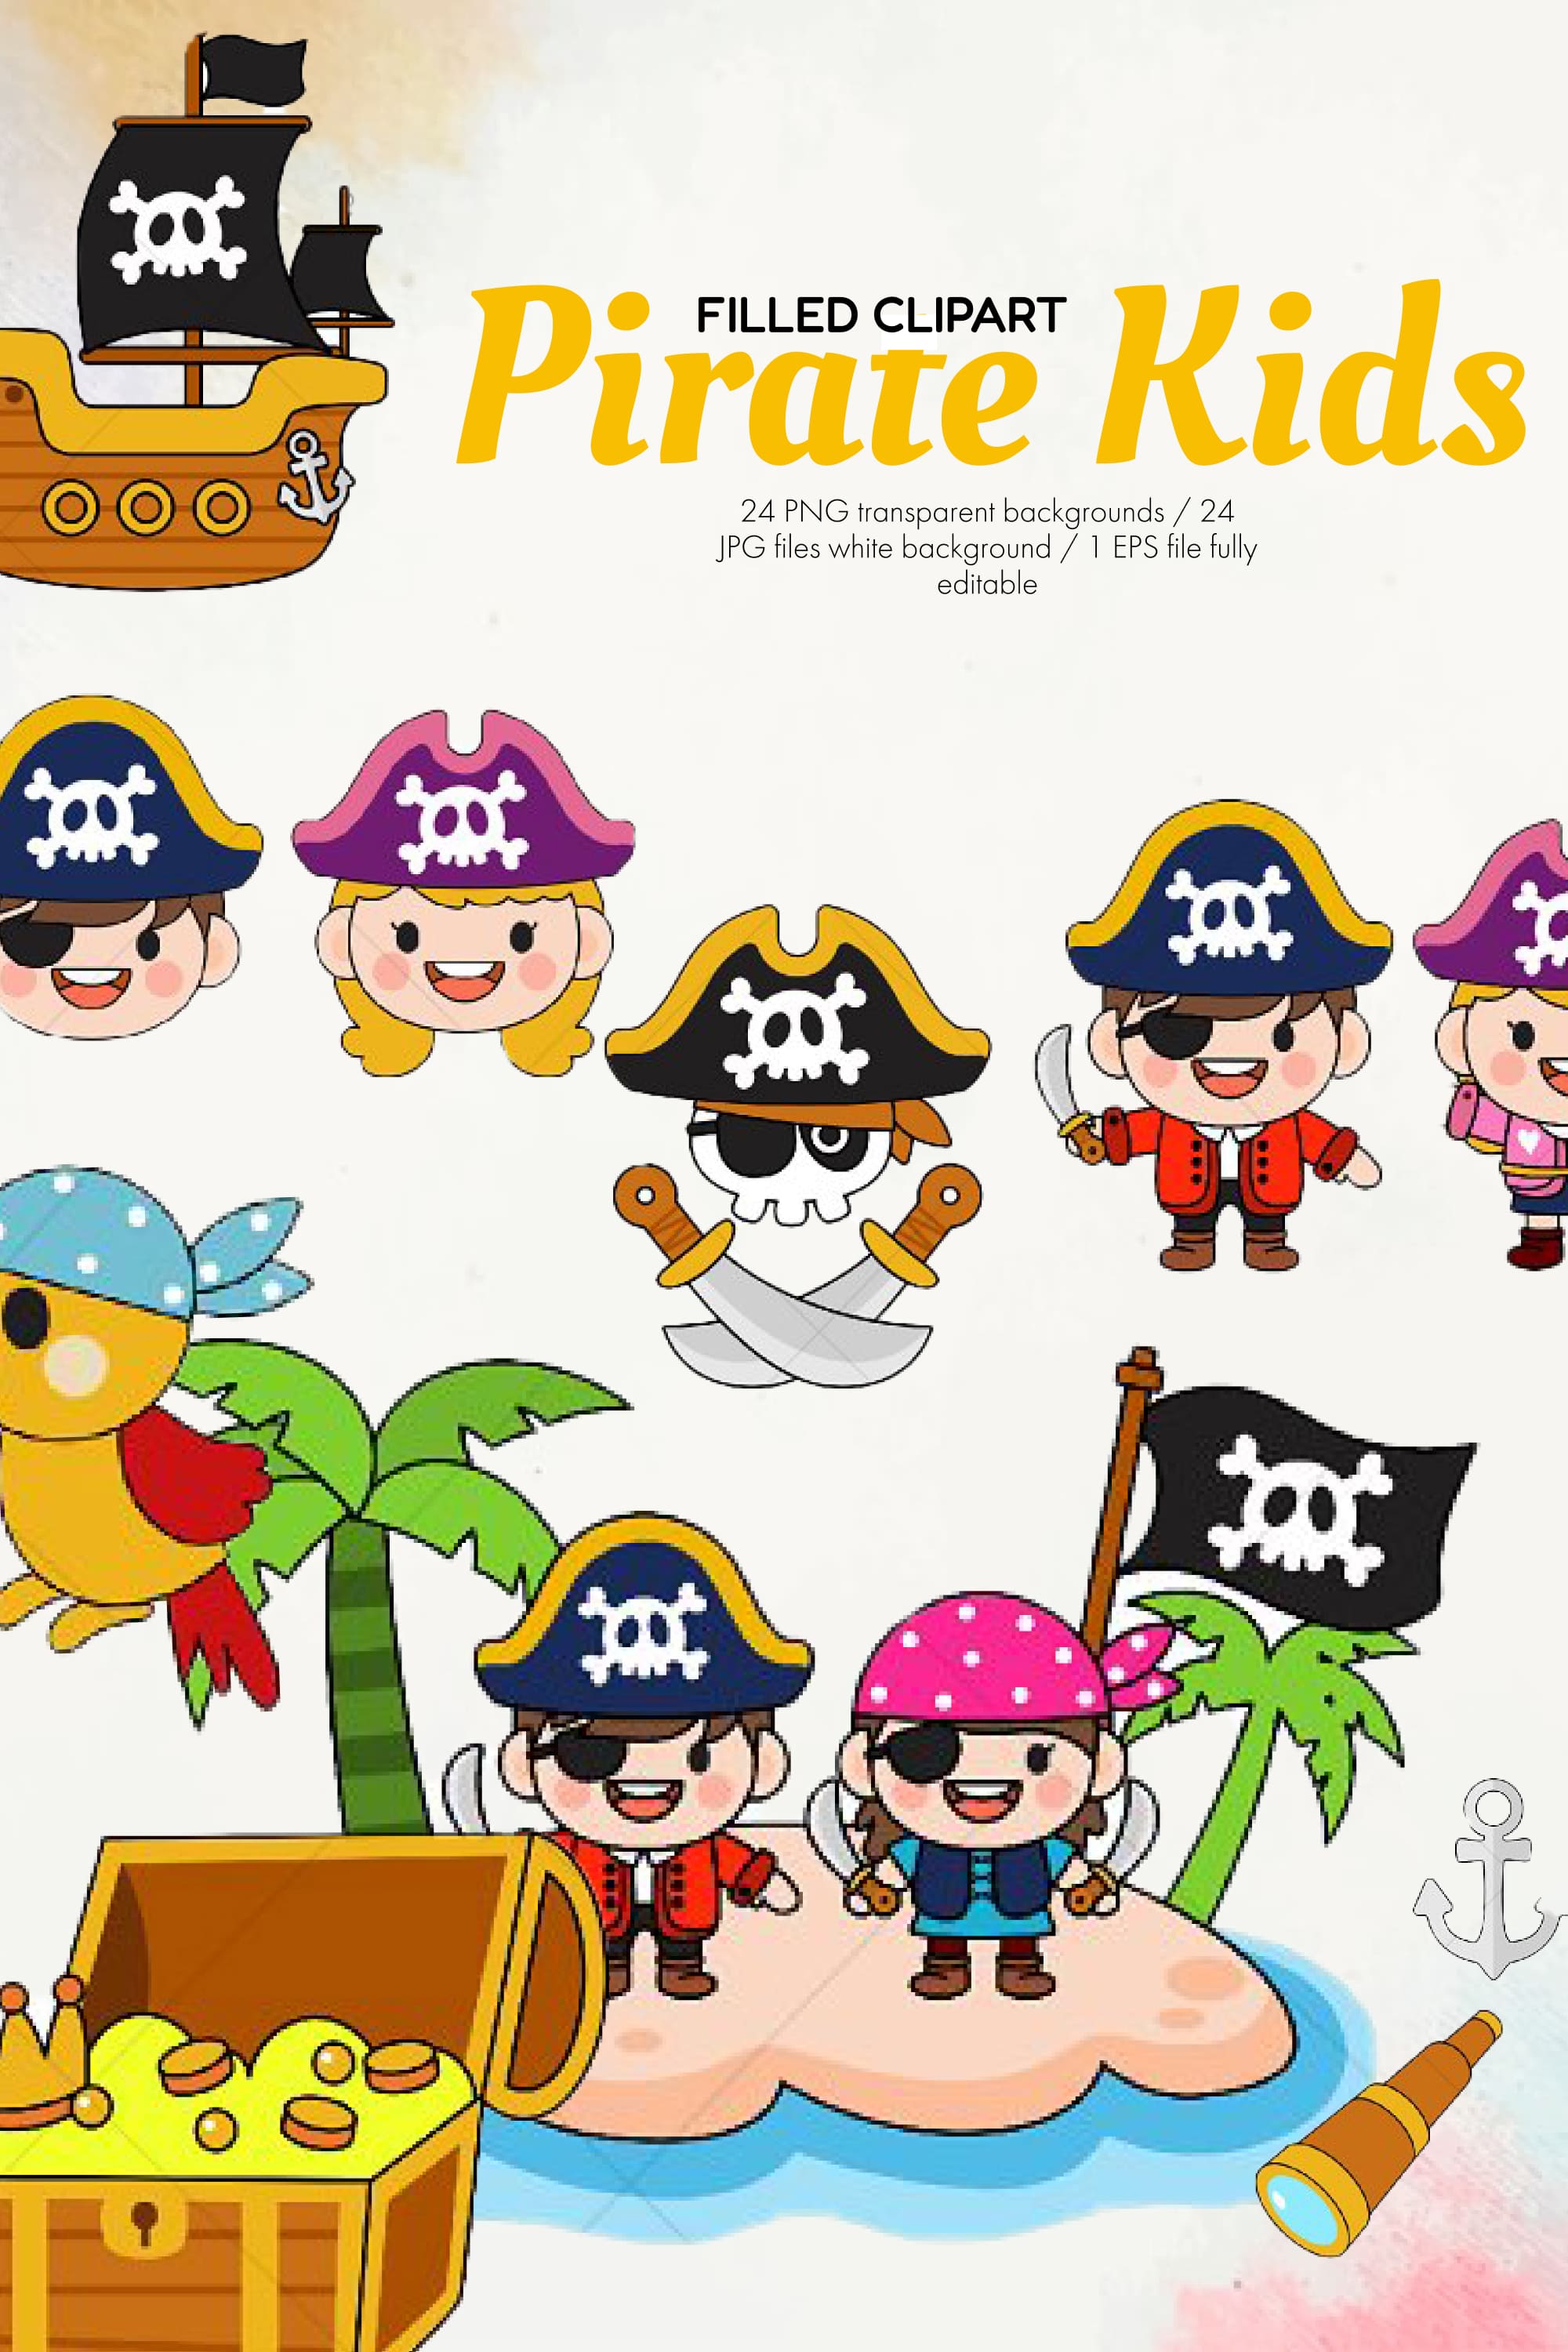 kids pirate filled clipart pinterest 33